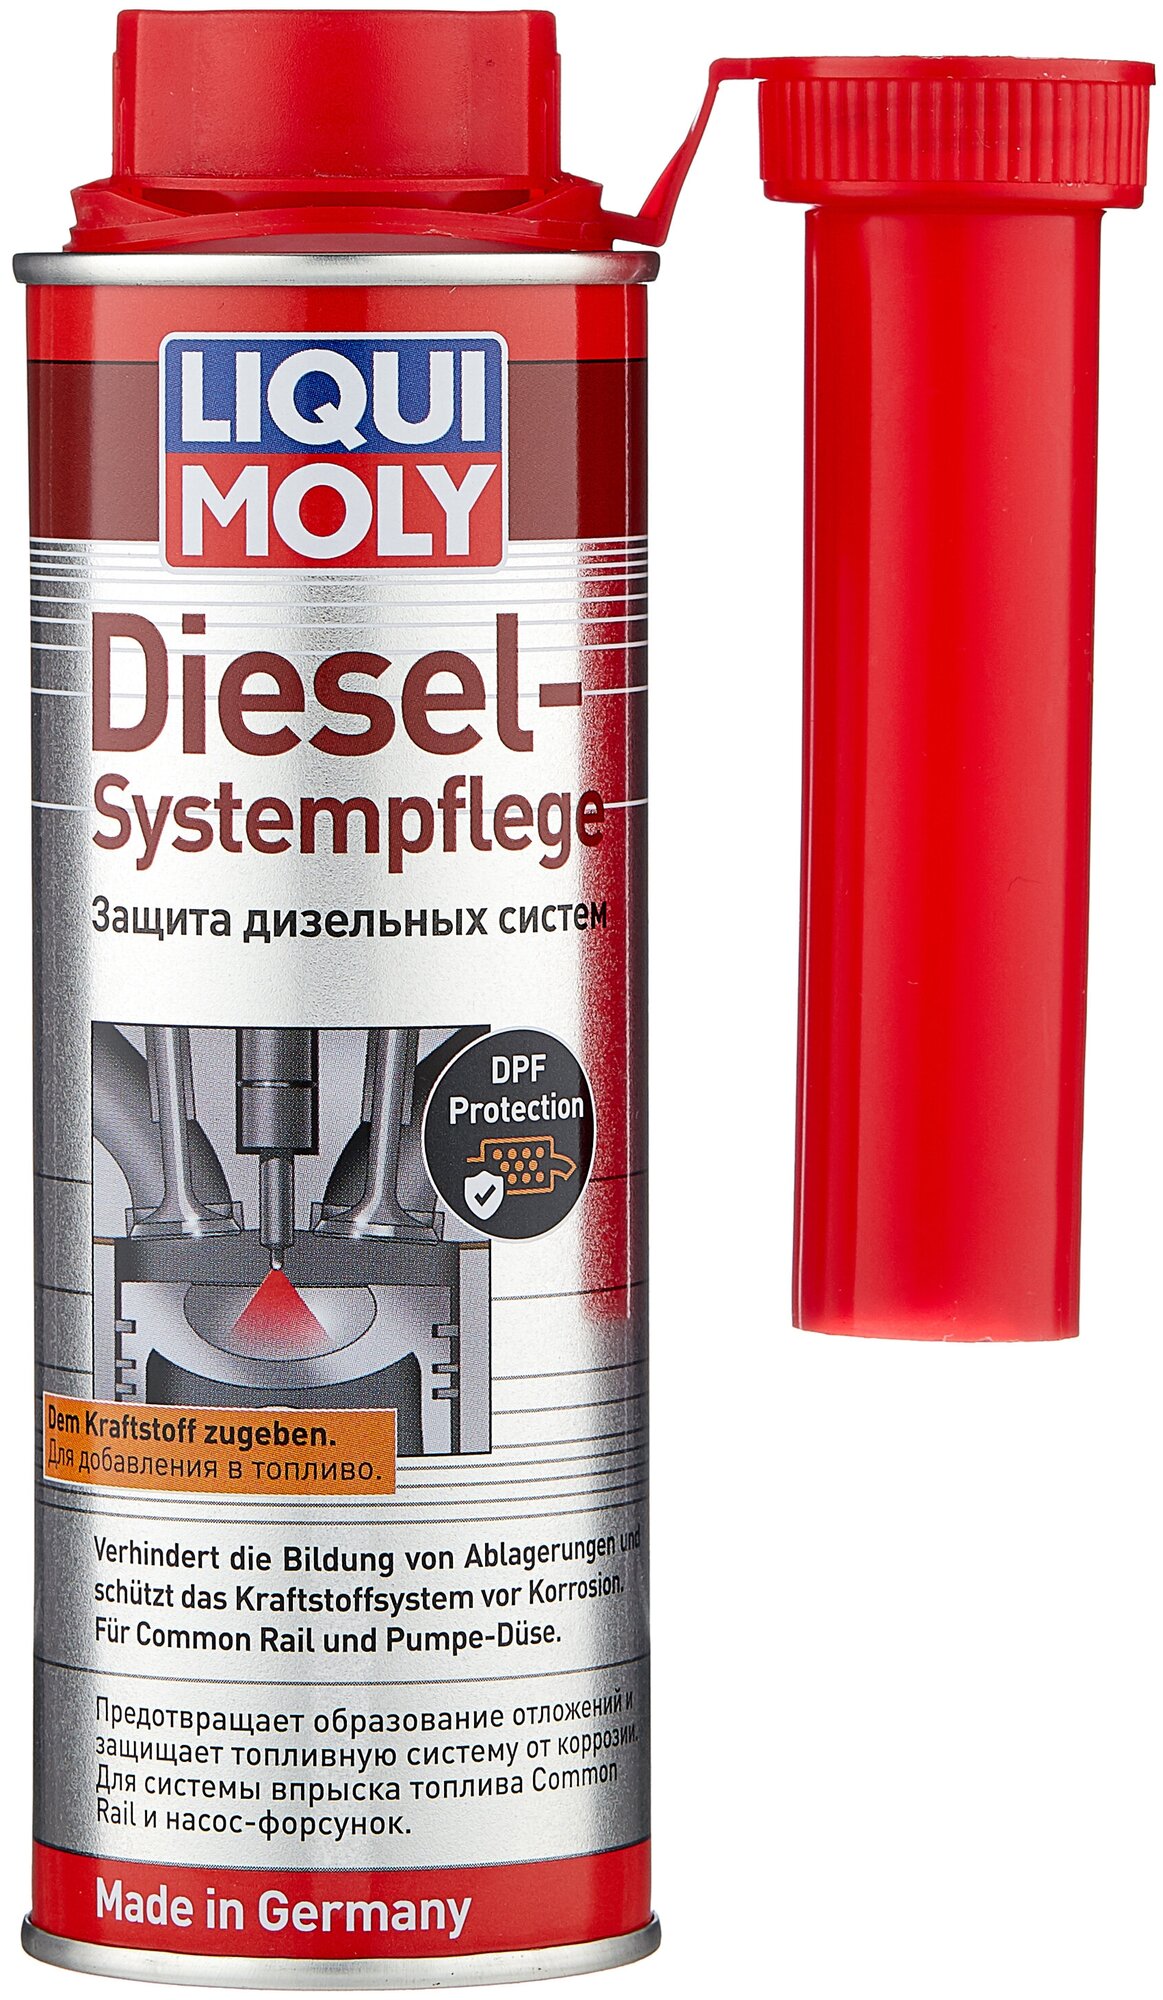 LIQUI MOLY Diesel Systempflege